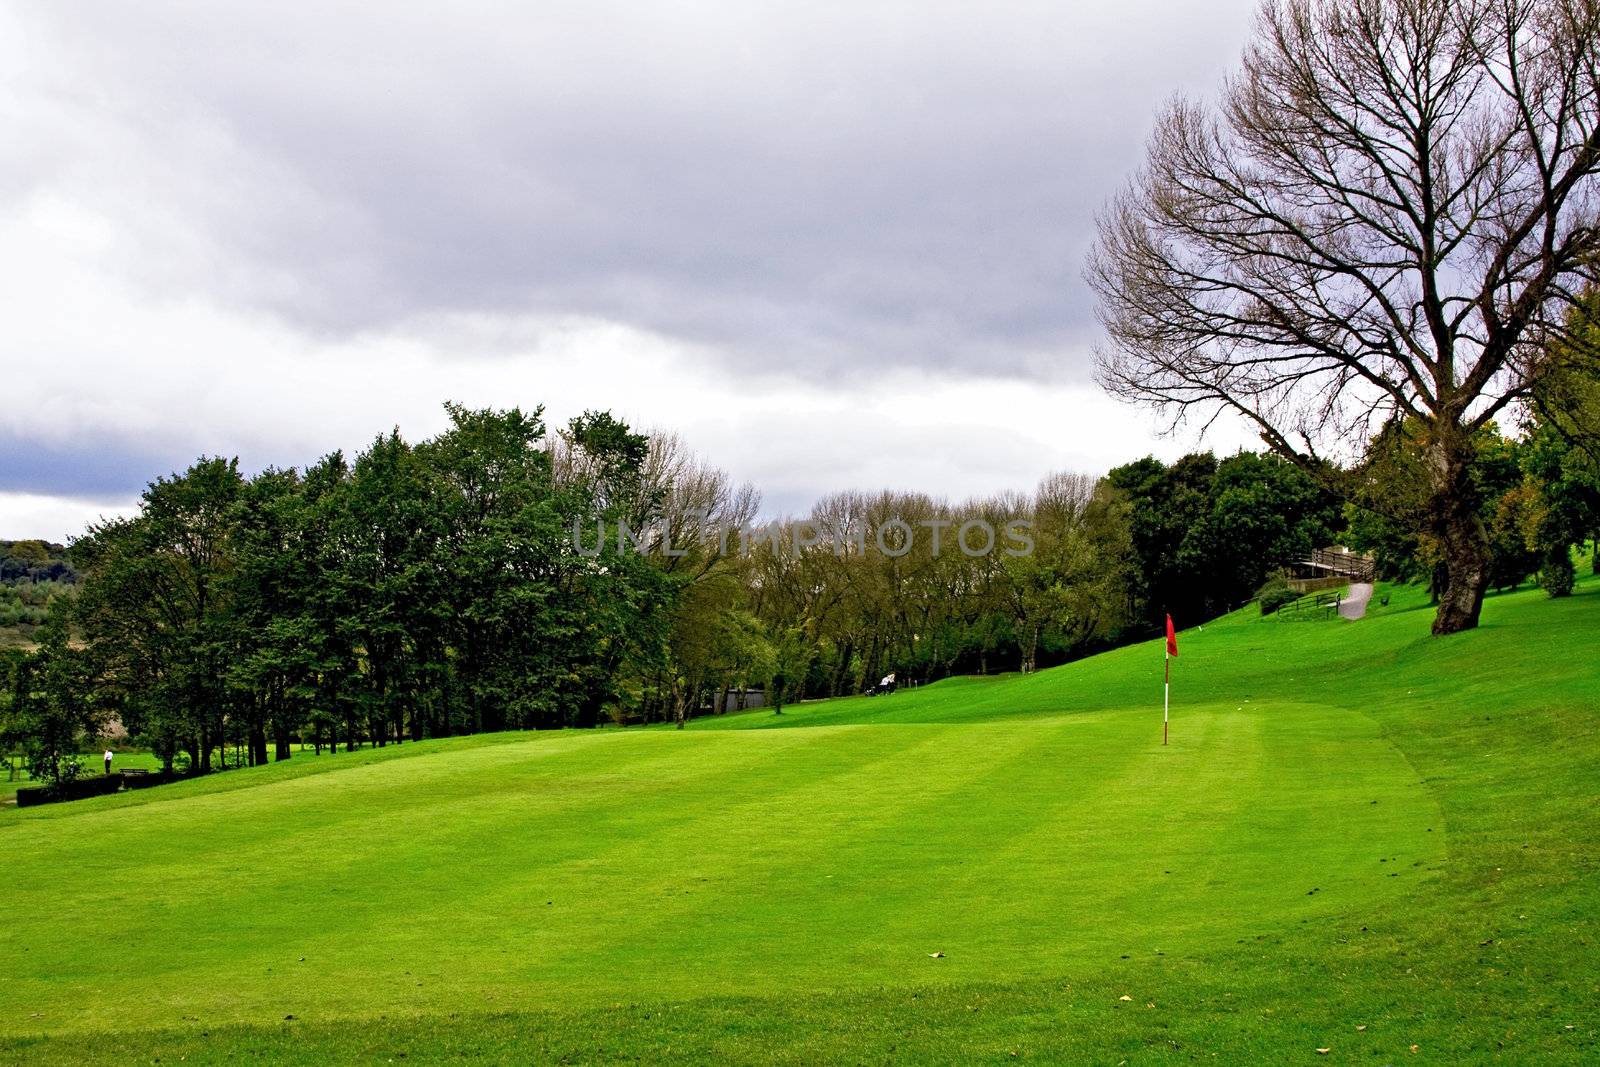 Golf Course in Autumn, green field